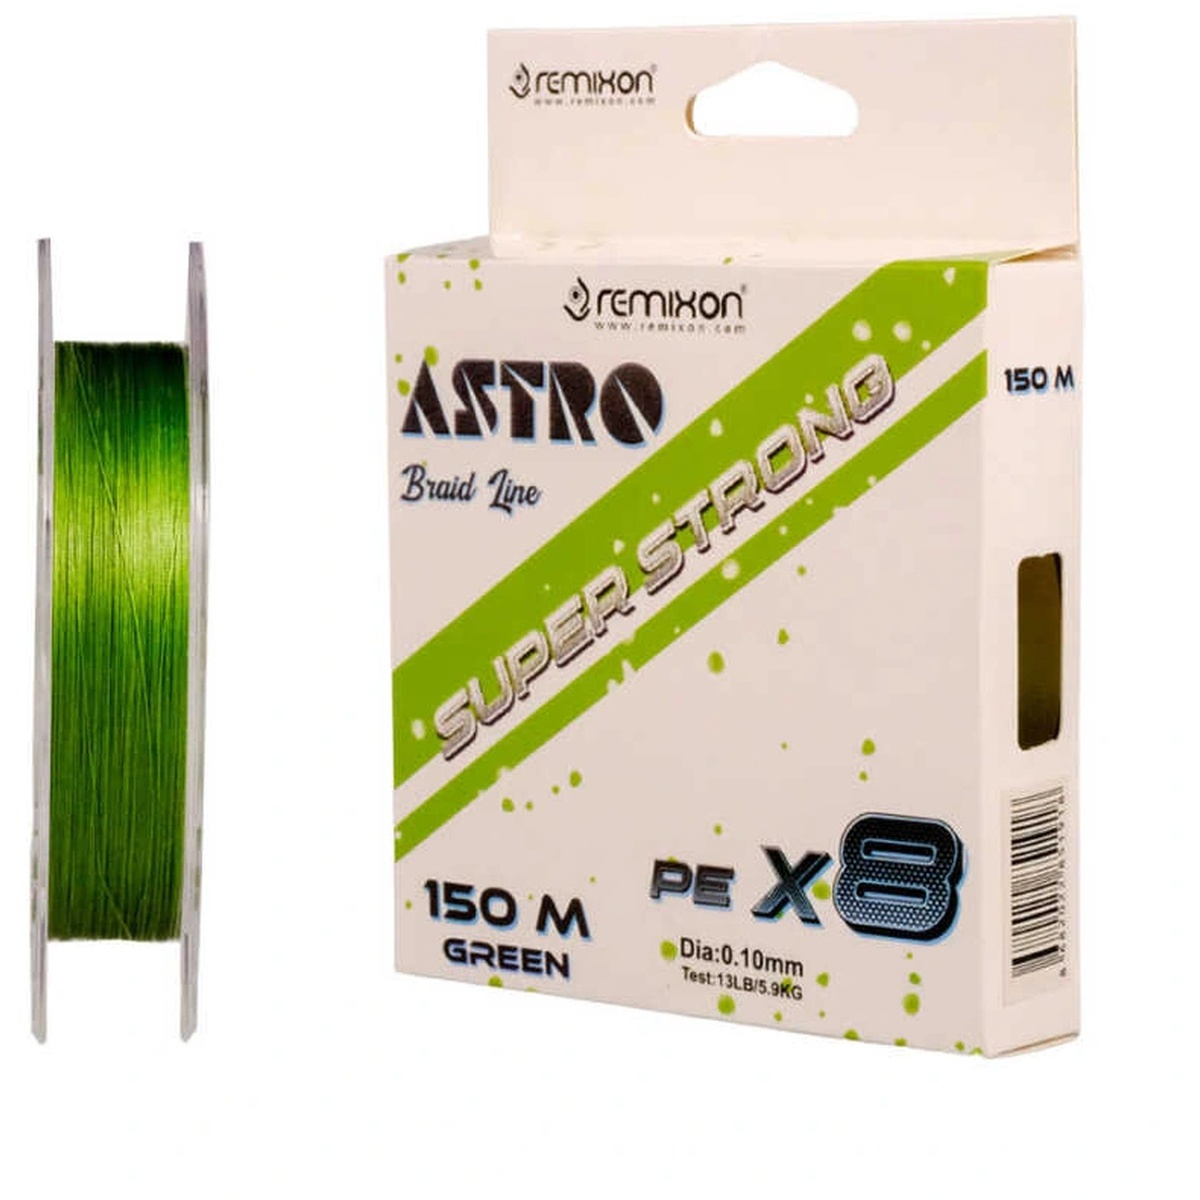 Remixon Astro 8x 150m Green İp Misina - 0,13mm